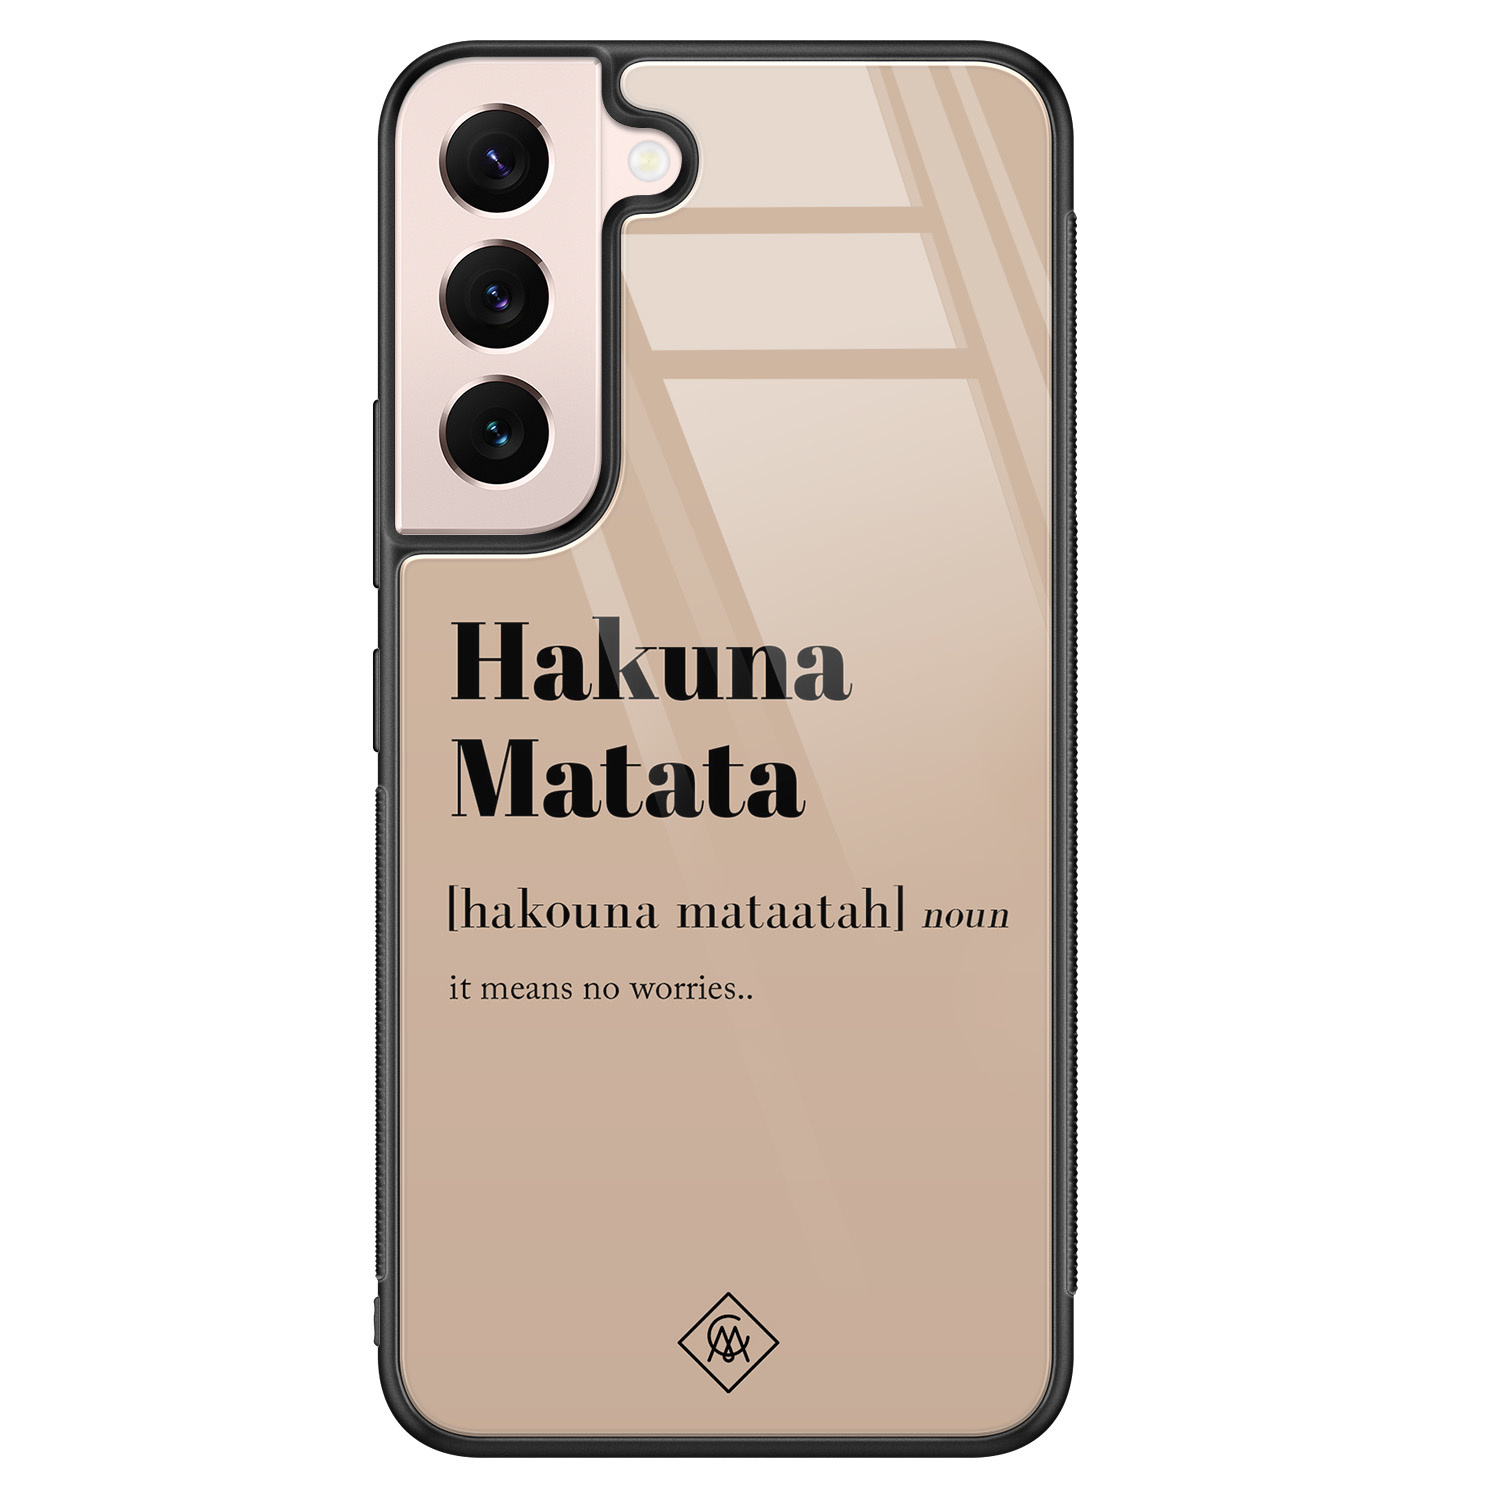 Samsung Galaxy S22 hoesje glas - Hakuna Matata - Bruin/beige - Hard Case Zwart - Backcover telefoonhoesje - Tekst - Casimoda